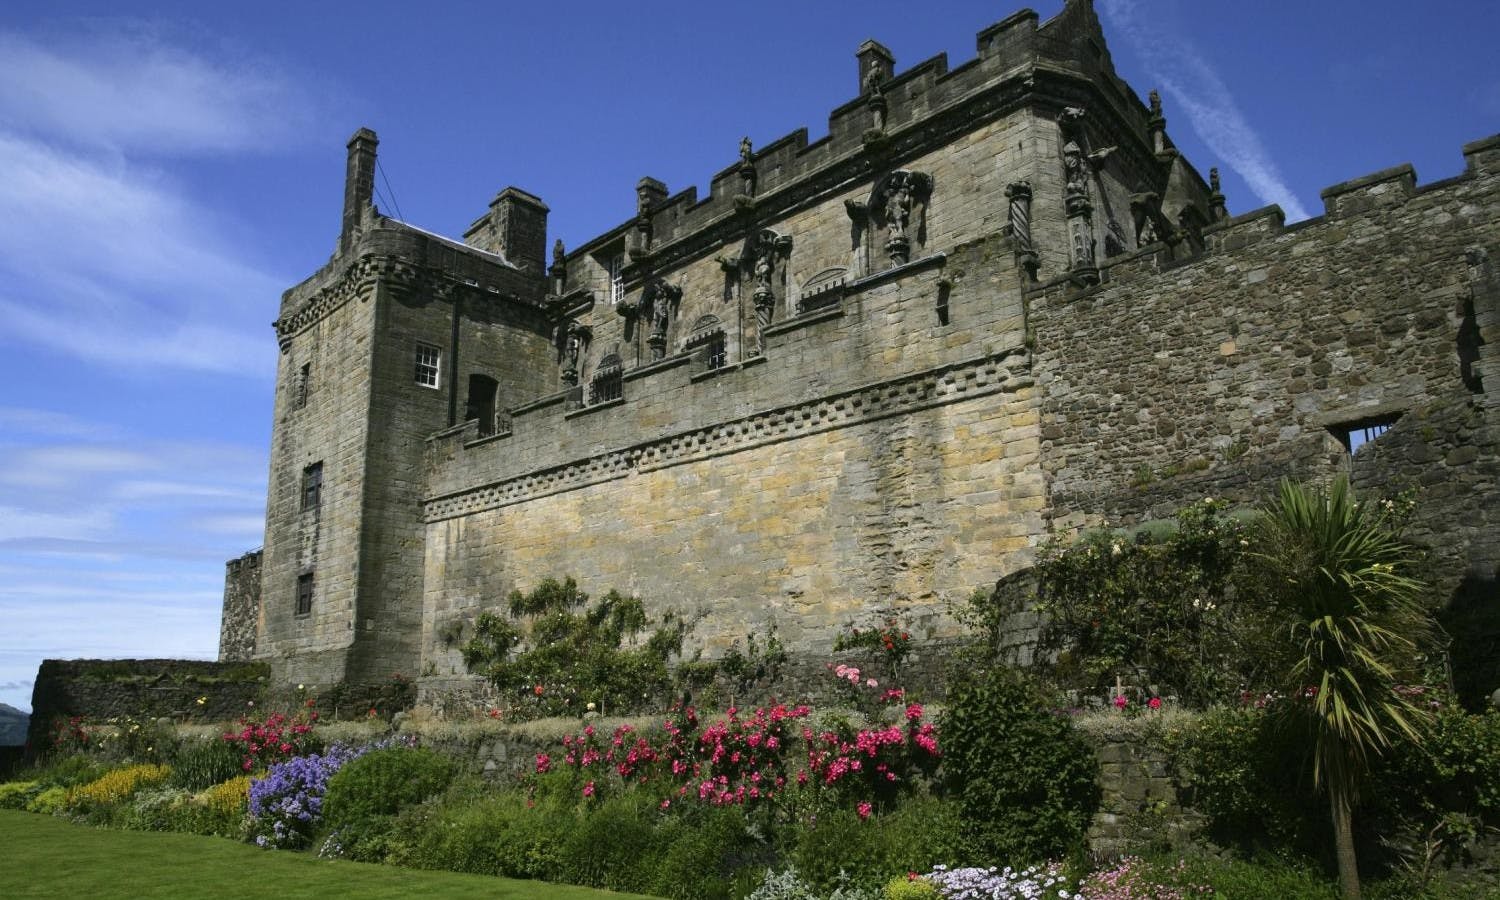 Loch Lomond, the Highlands, & Stirling Castle - Day Trip